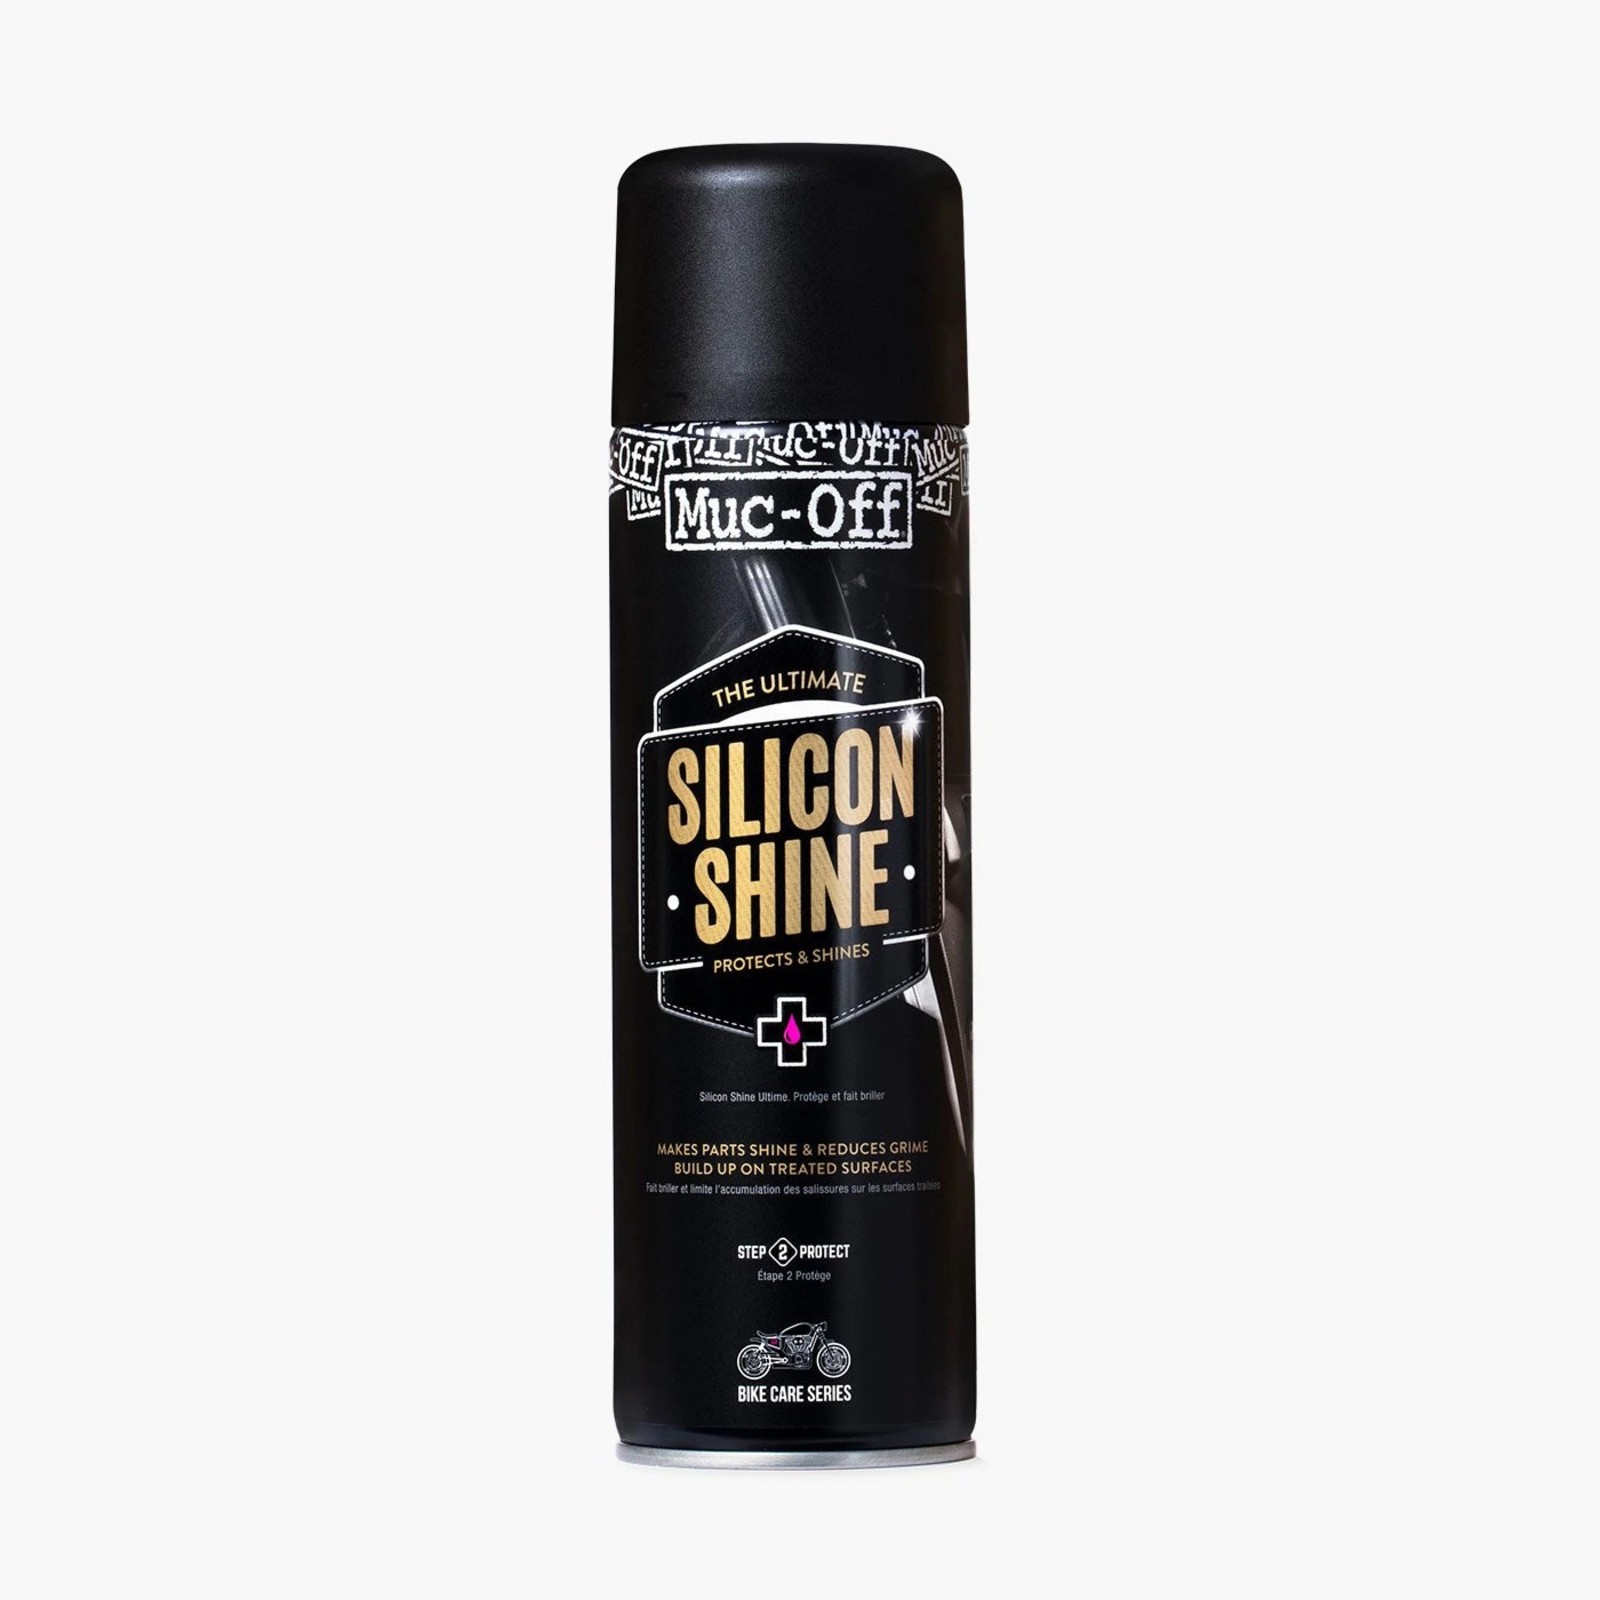 Silicon Shine spray de cuidado de brillo de silicona para